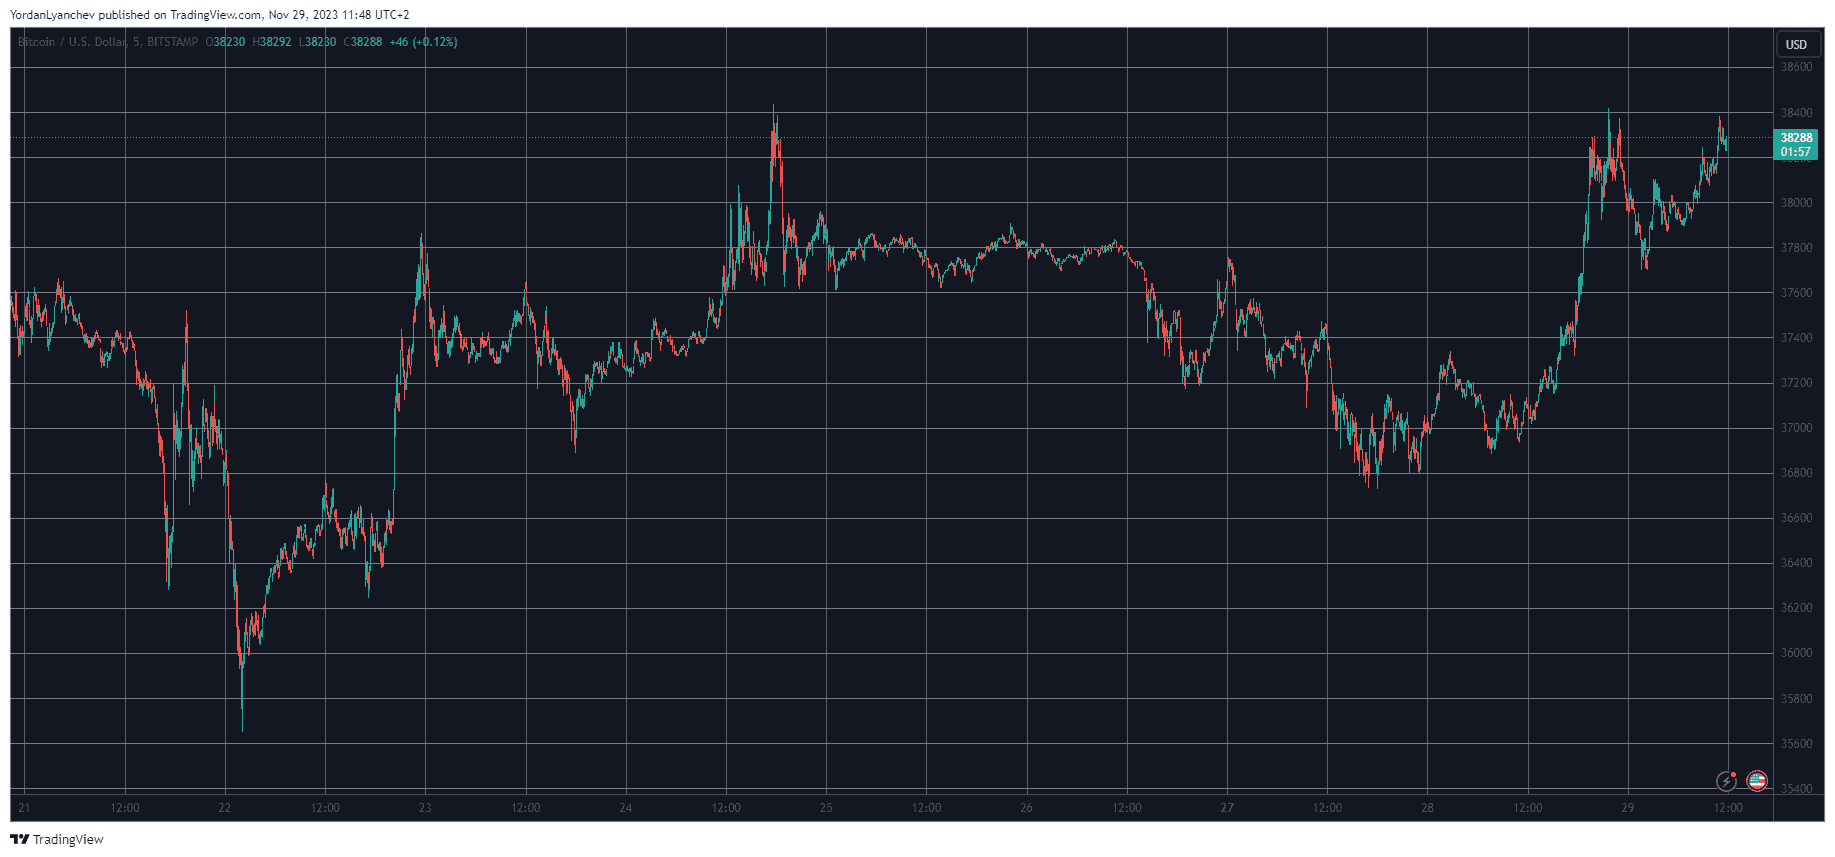 Bitcoin (BTC) Price Soars Past $38K, Solana (SOL) Jumps Above $60 (Market Watch)